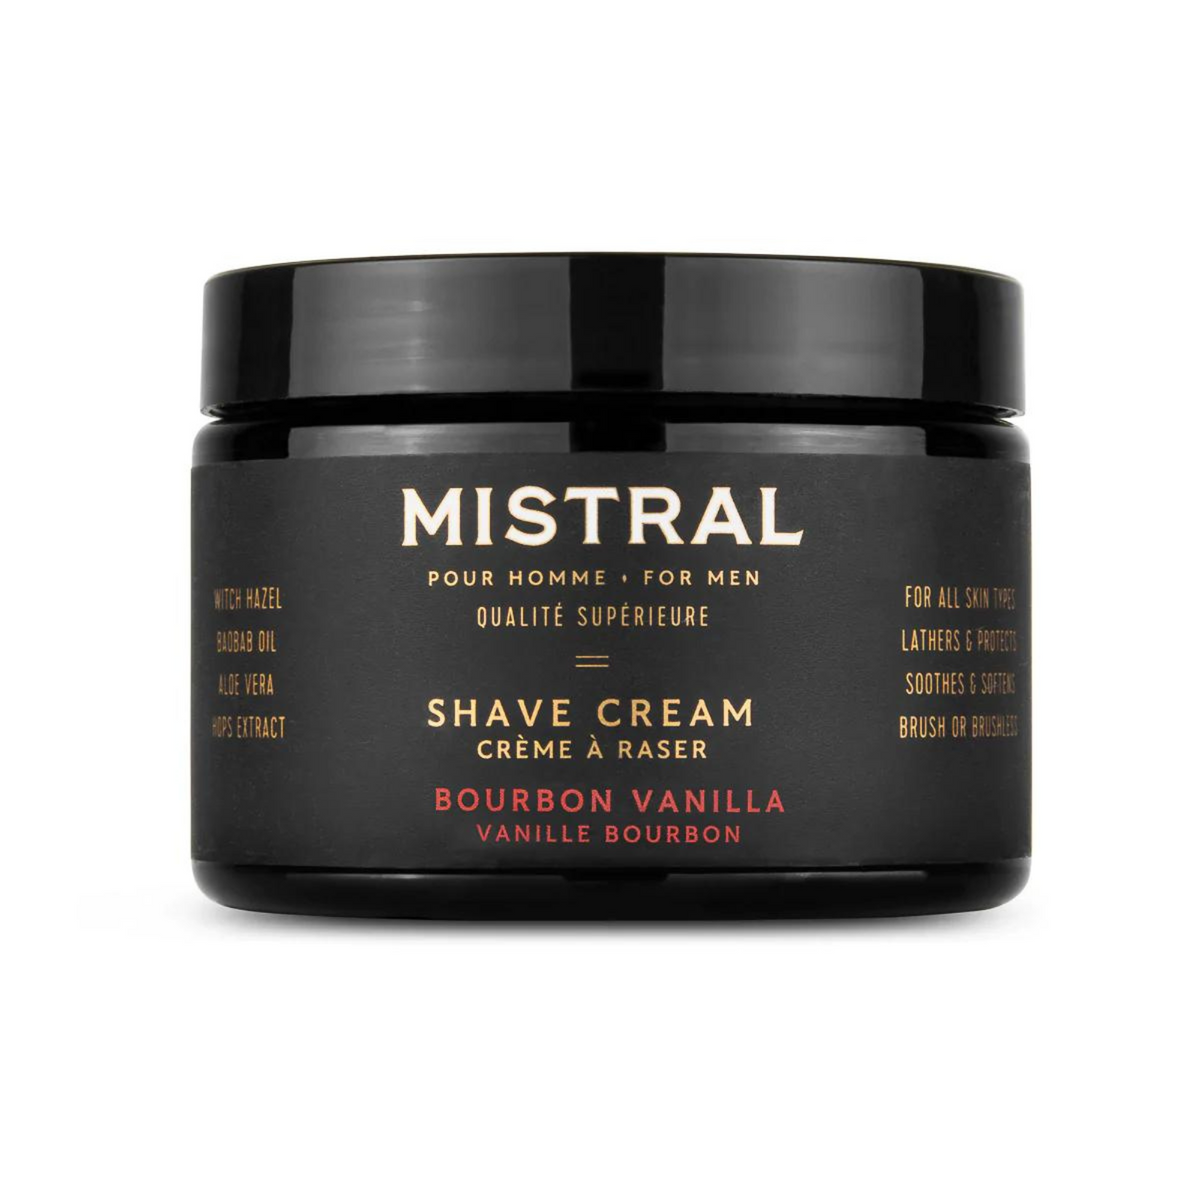 Primary Image of Mistral Bourbon Vanilla Shave Cream (9 oz)